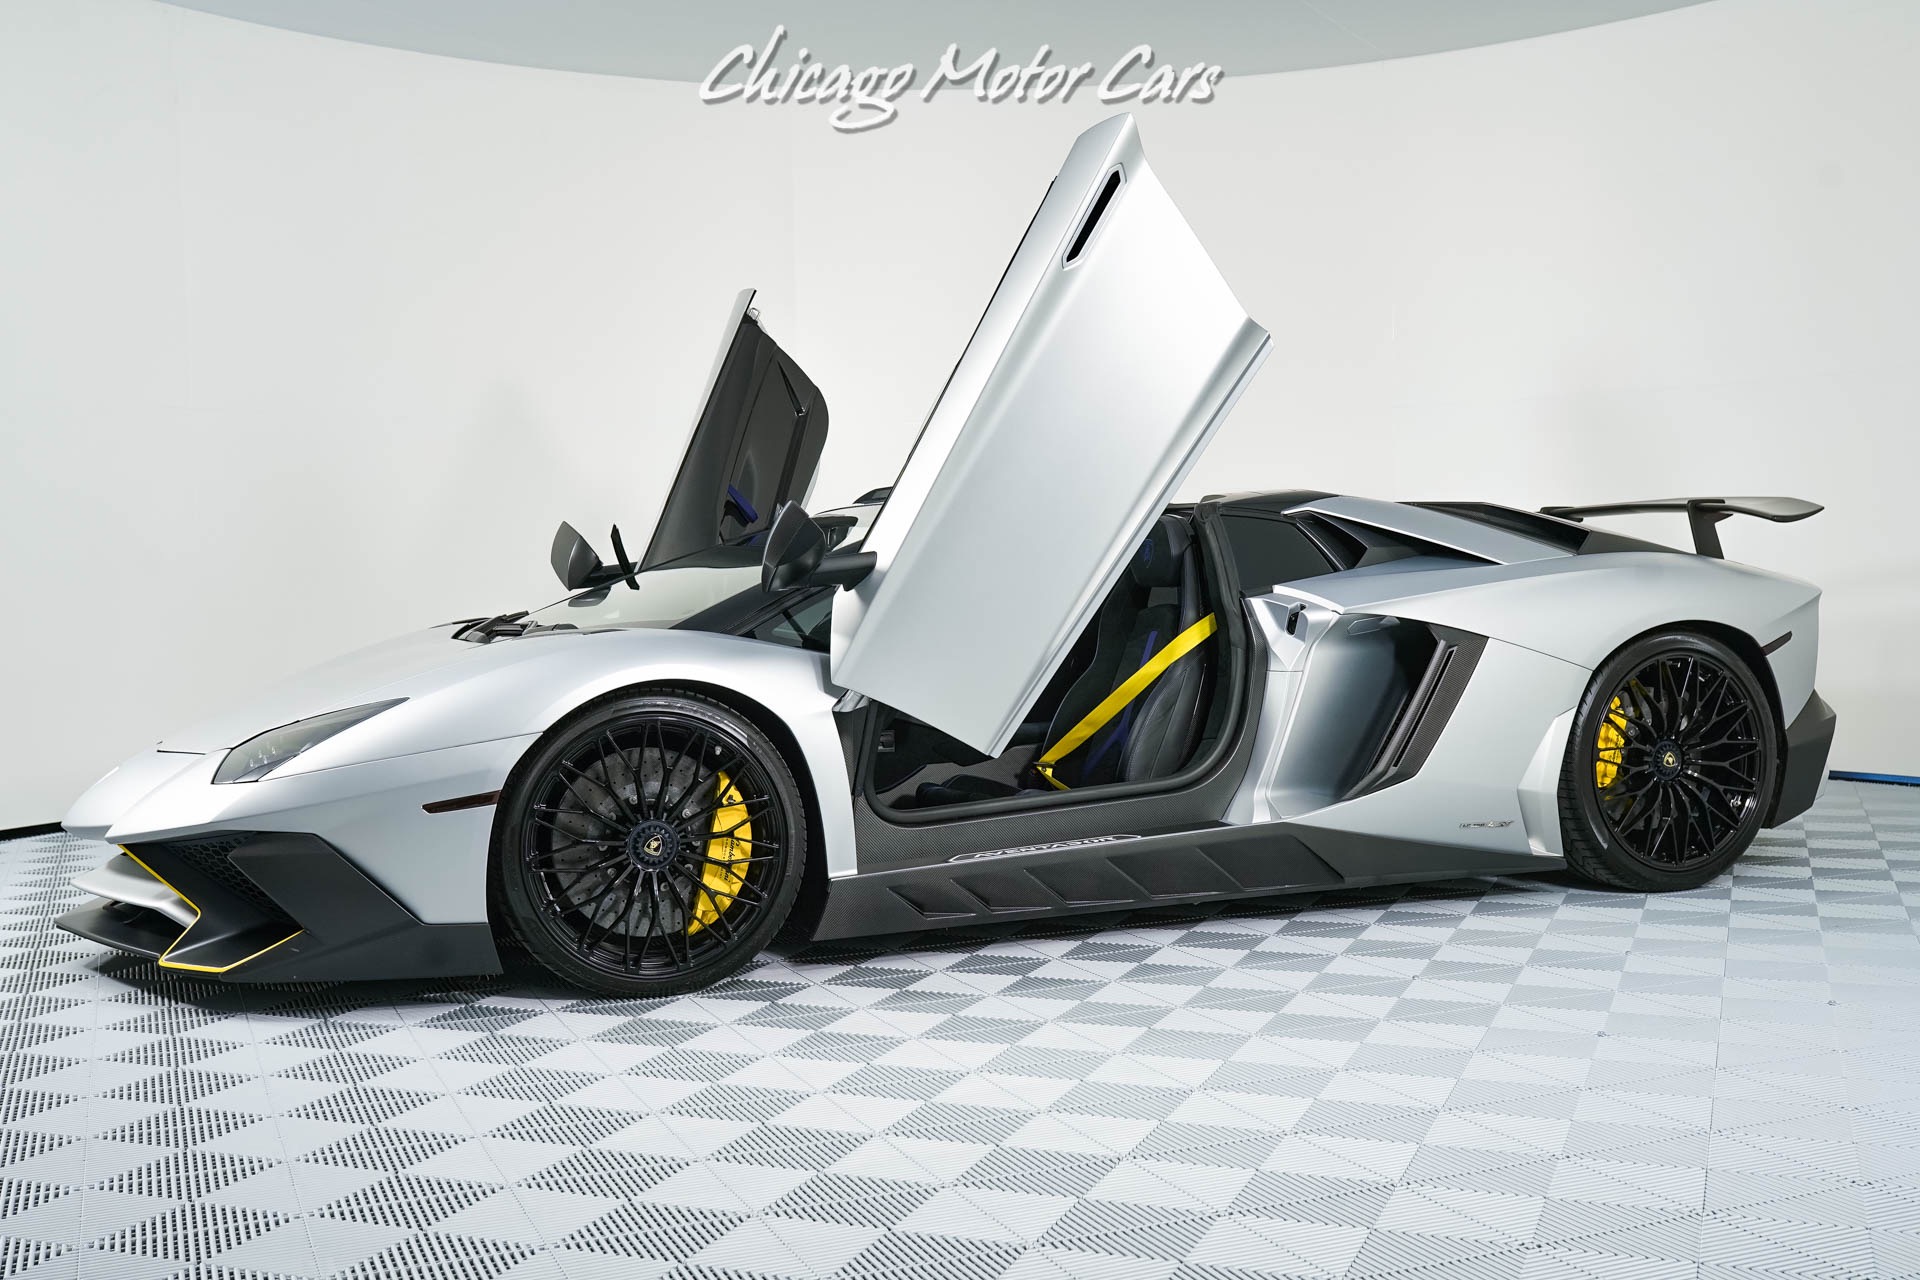 Used 2017 Lamborghini Aventador LP750-4 SV Roadster Only 5k Miles!  Serviced! Carbon Fiber LOADED For Sale ($639,800) | Chicago Motor Cars  Stock #HLA05665-SC